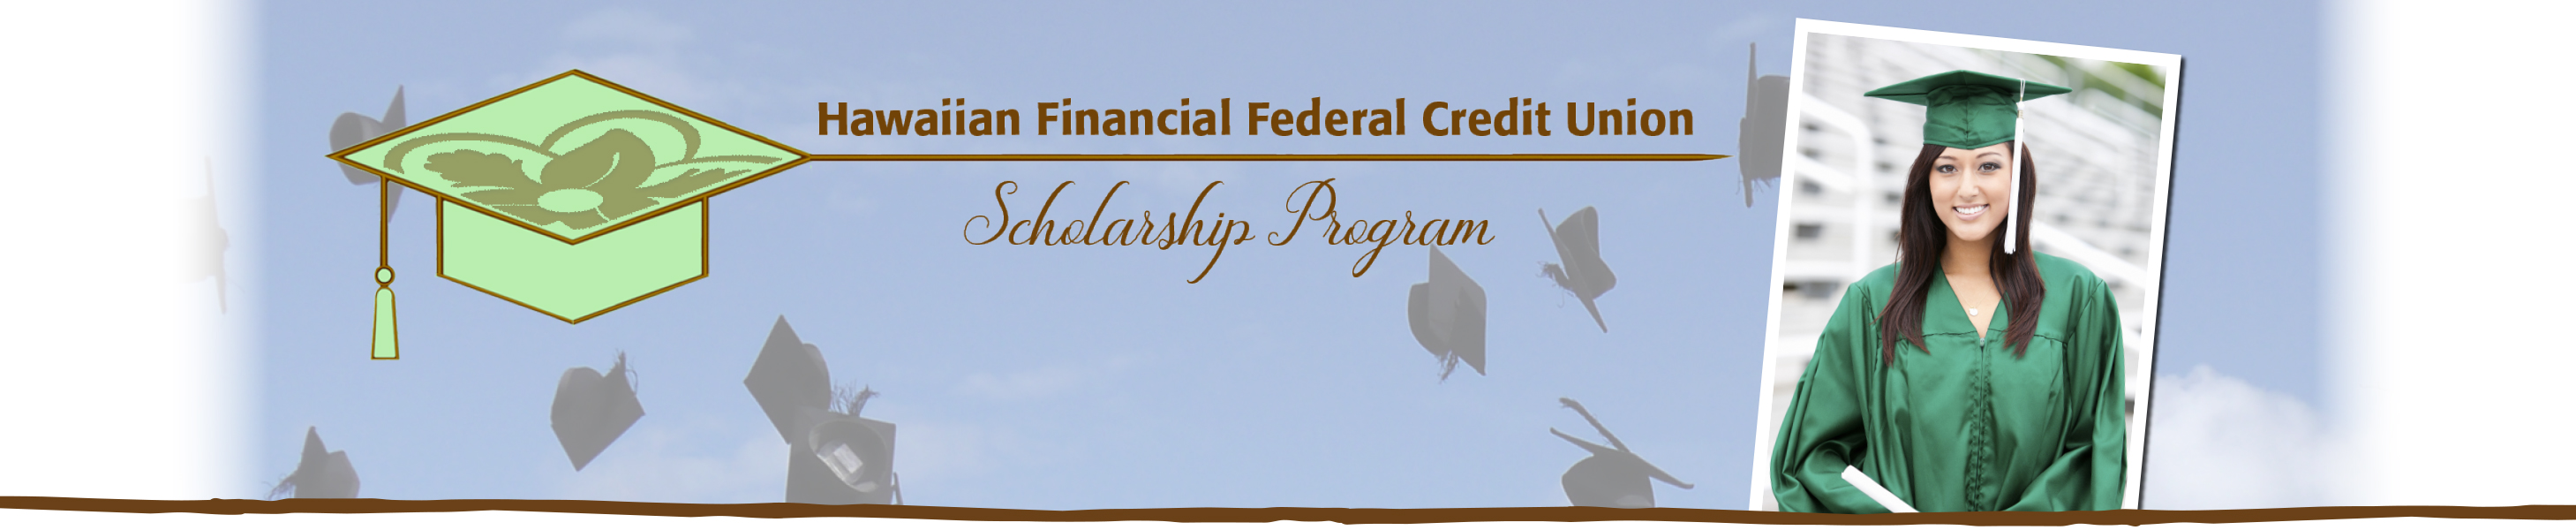 Hawaiian Financial Federal Credit Union Scholarship Program